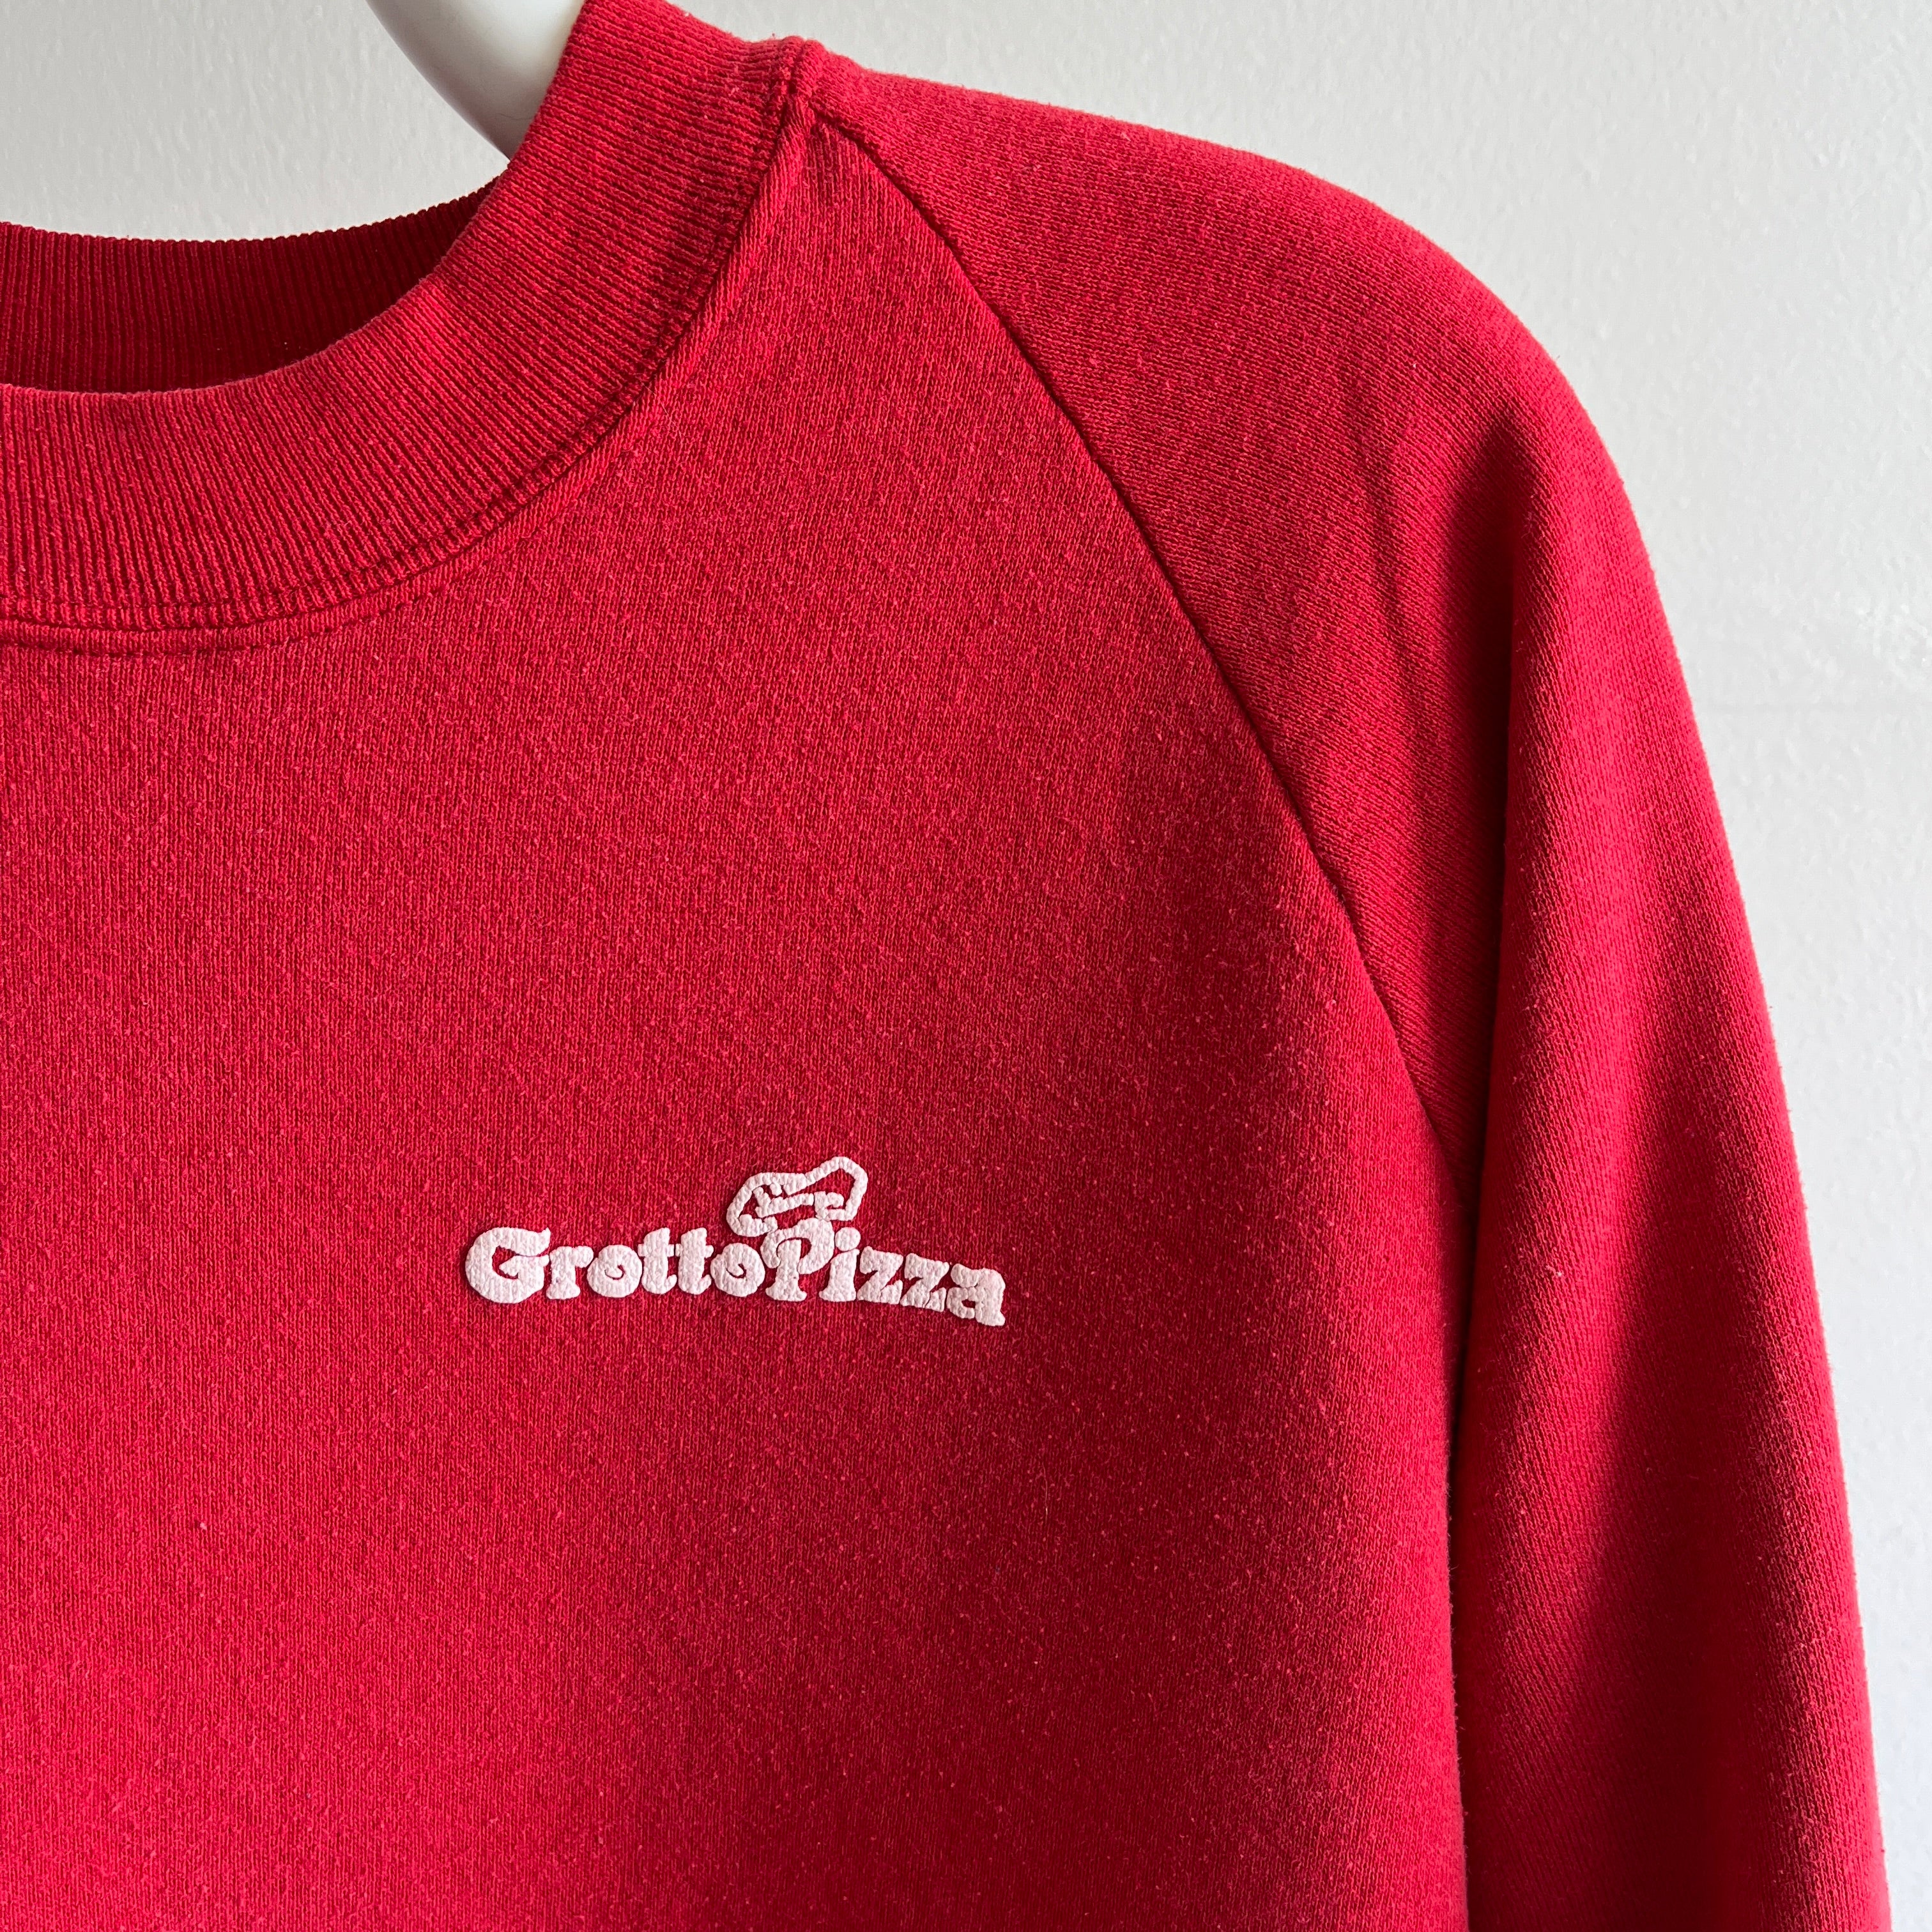 1980s Grotto Pizza Sweatshirt by Jerzees